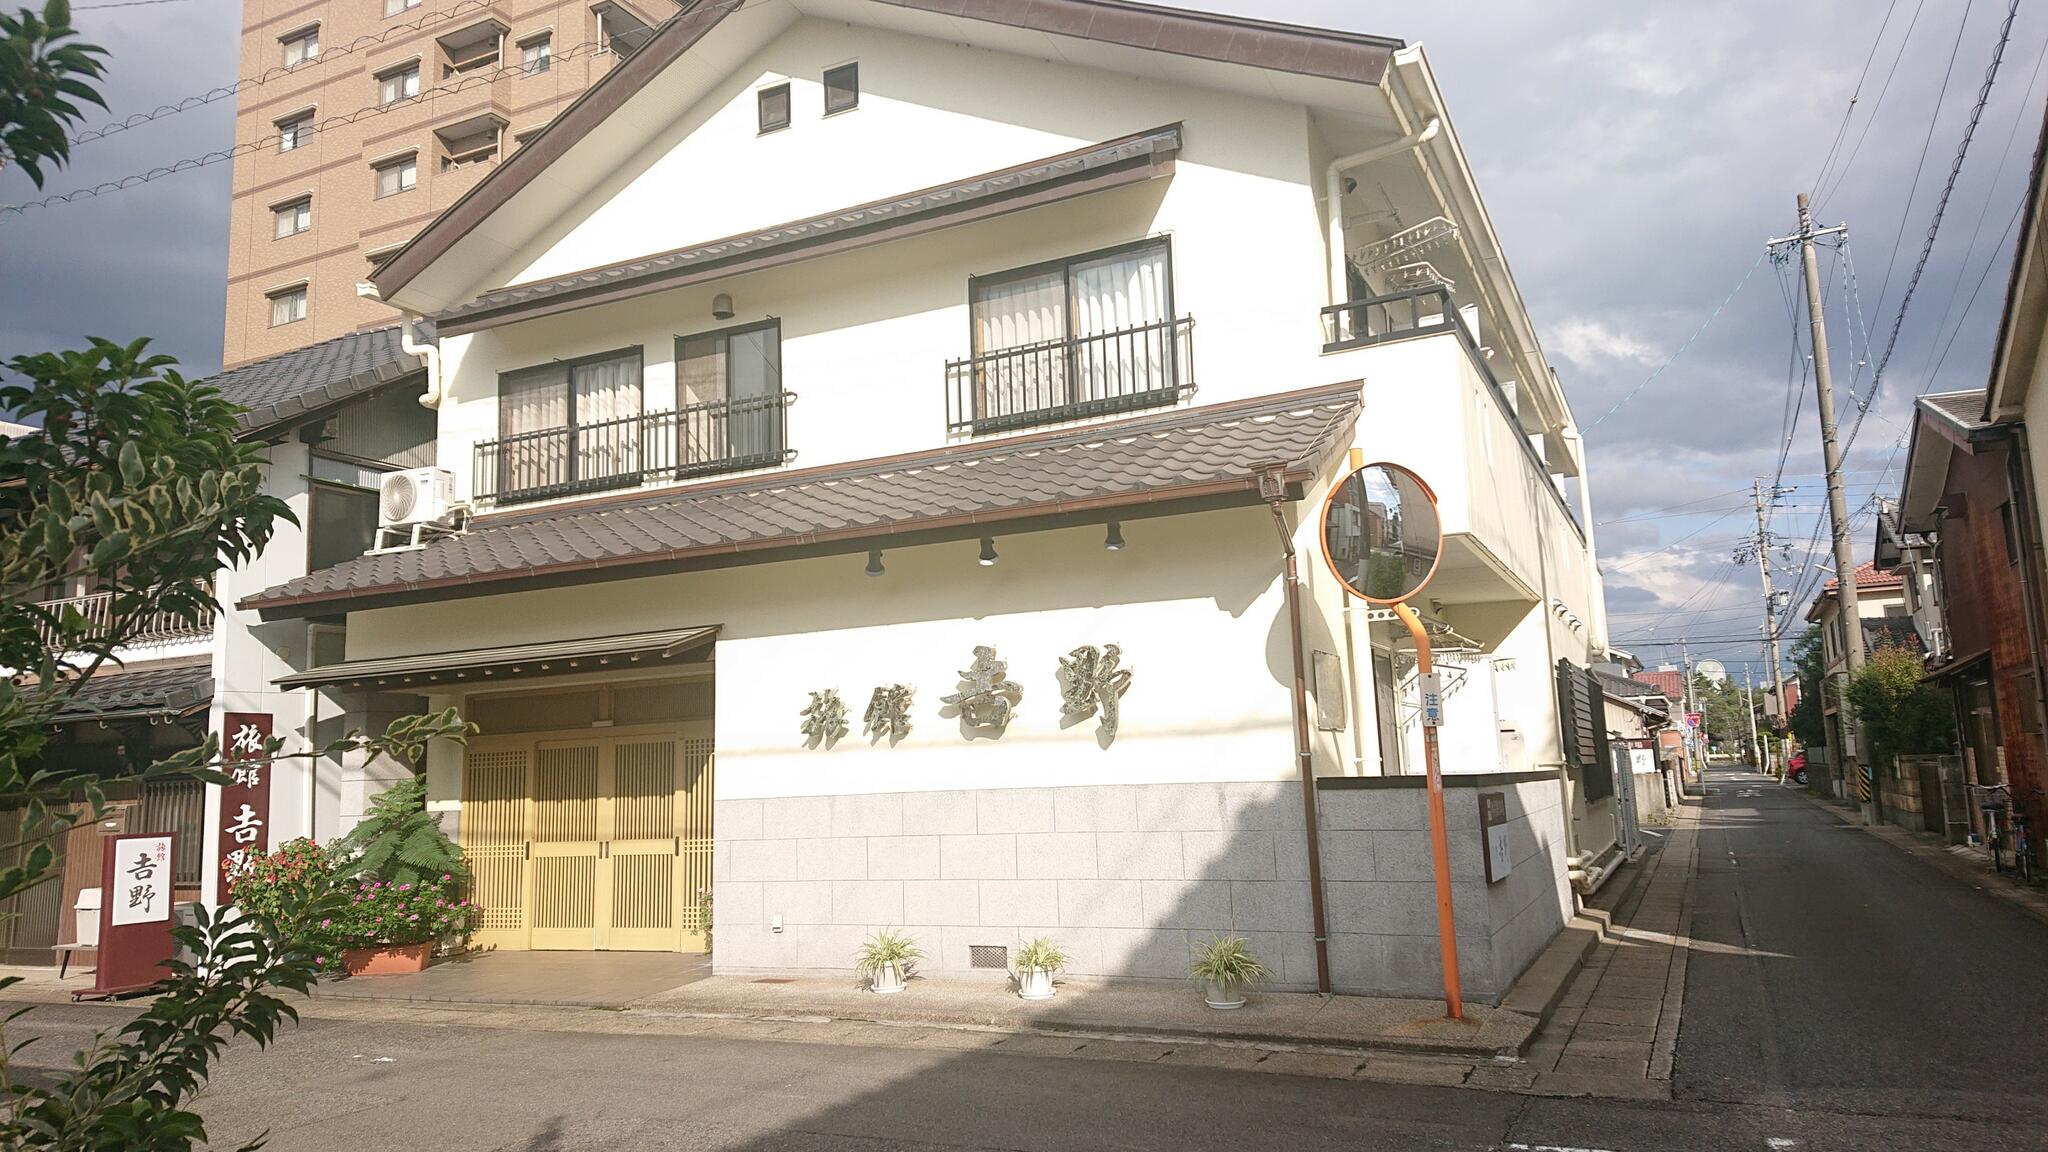 旅館 吉野の代表写真3